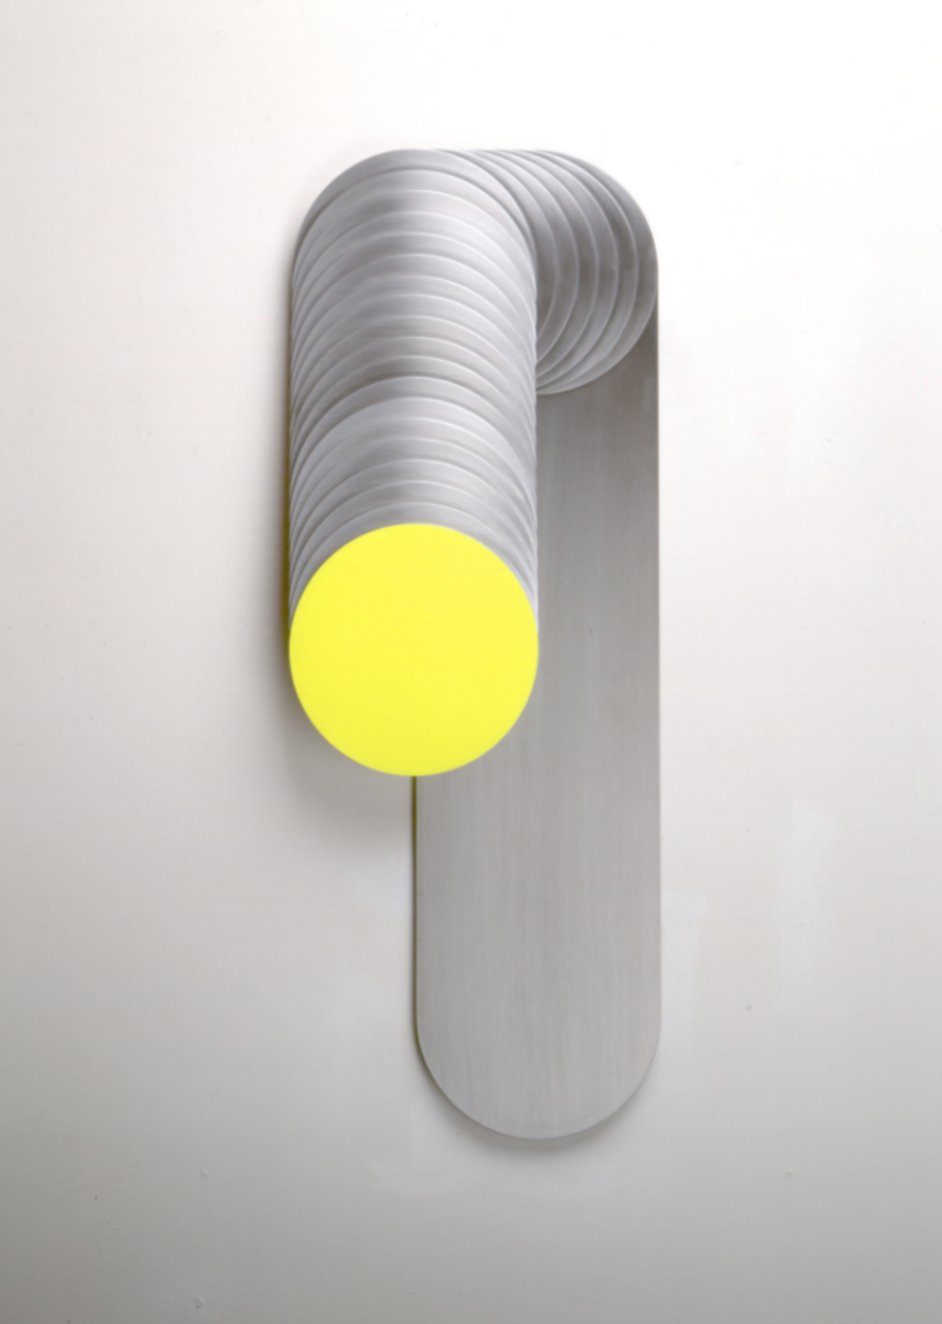 Thomas Lenk: Goldregen, 1998, Aluminium, Frontplatten leuchtgelb, 100 x 38 x 10 cm